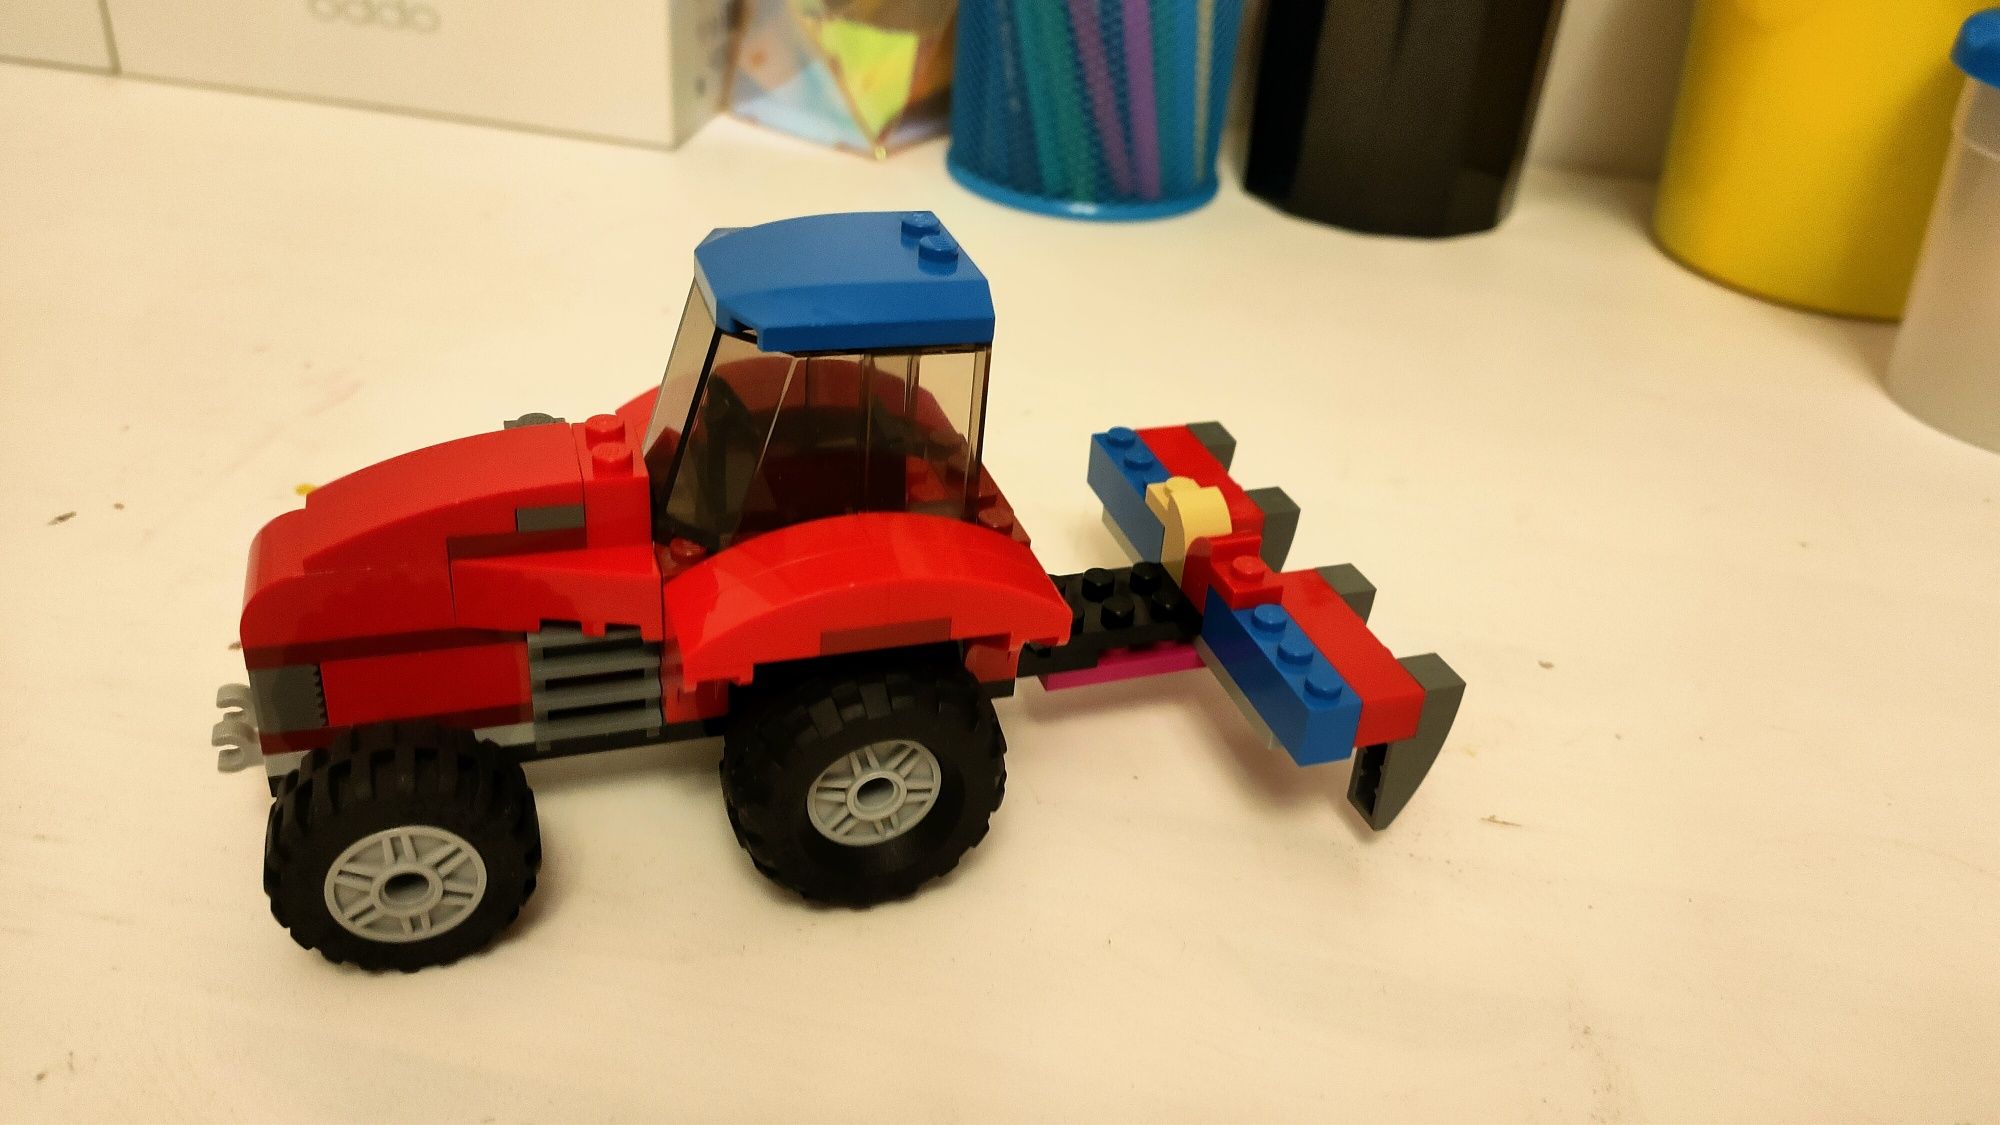 Tractor lego classic 10697